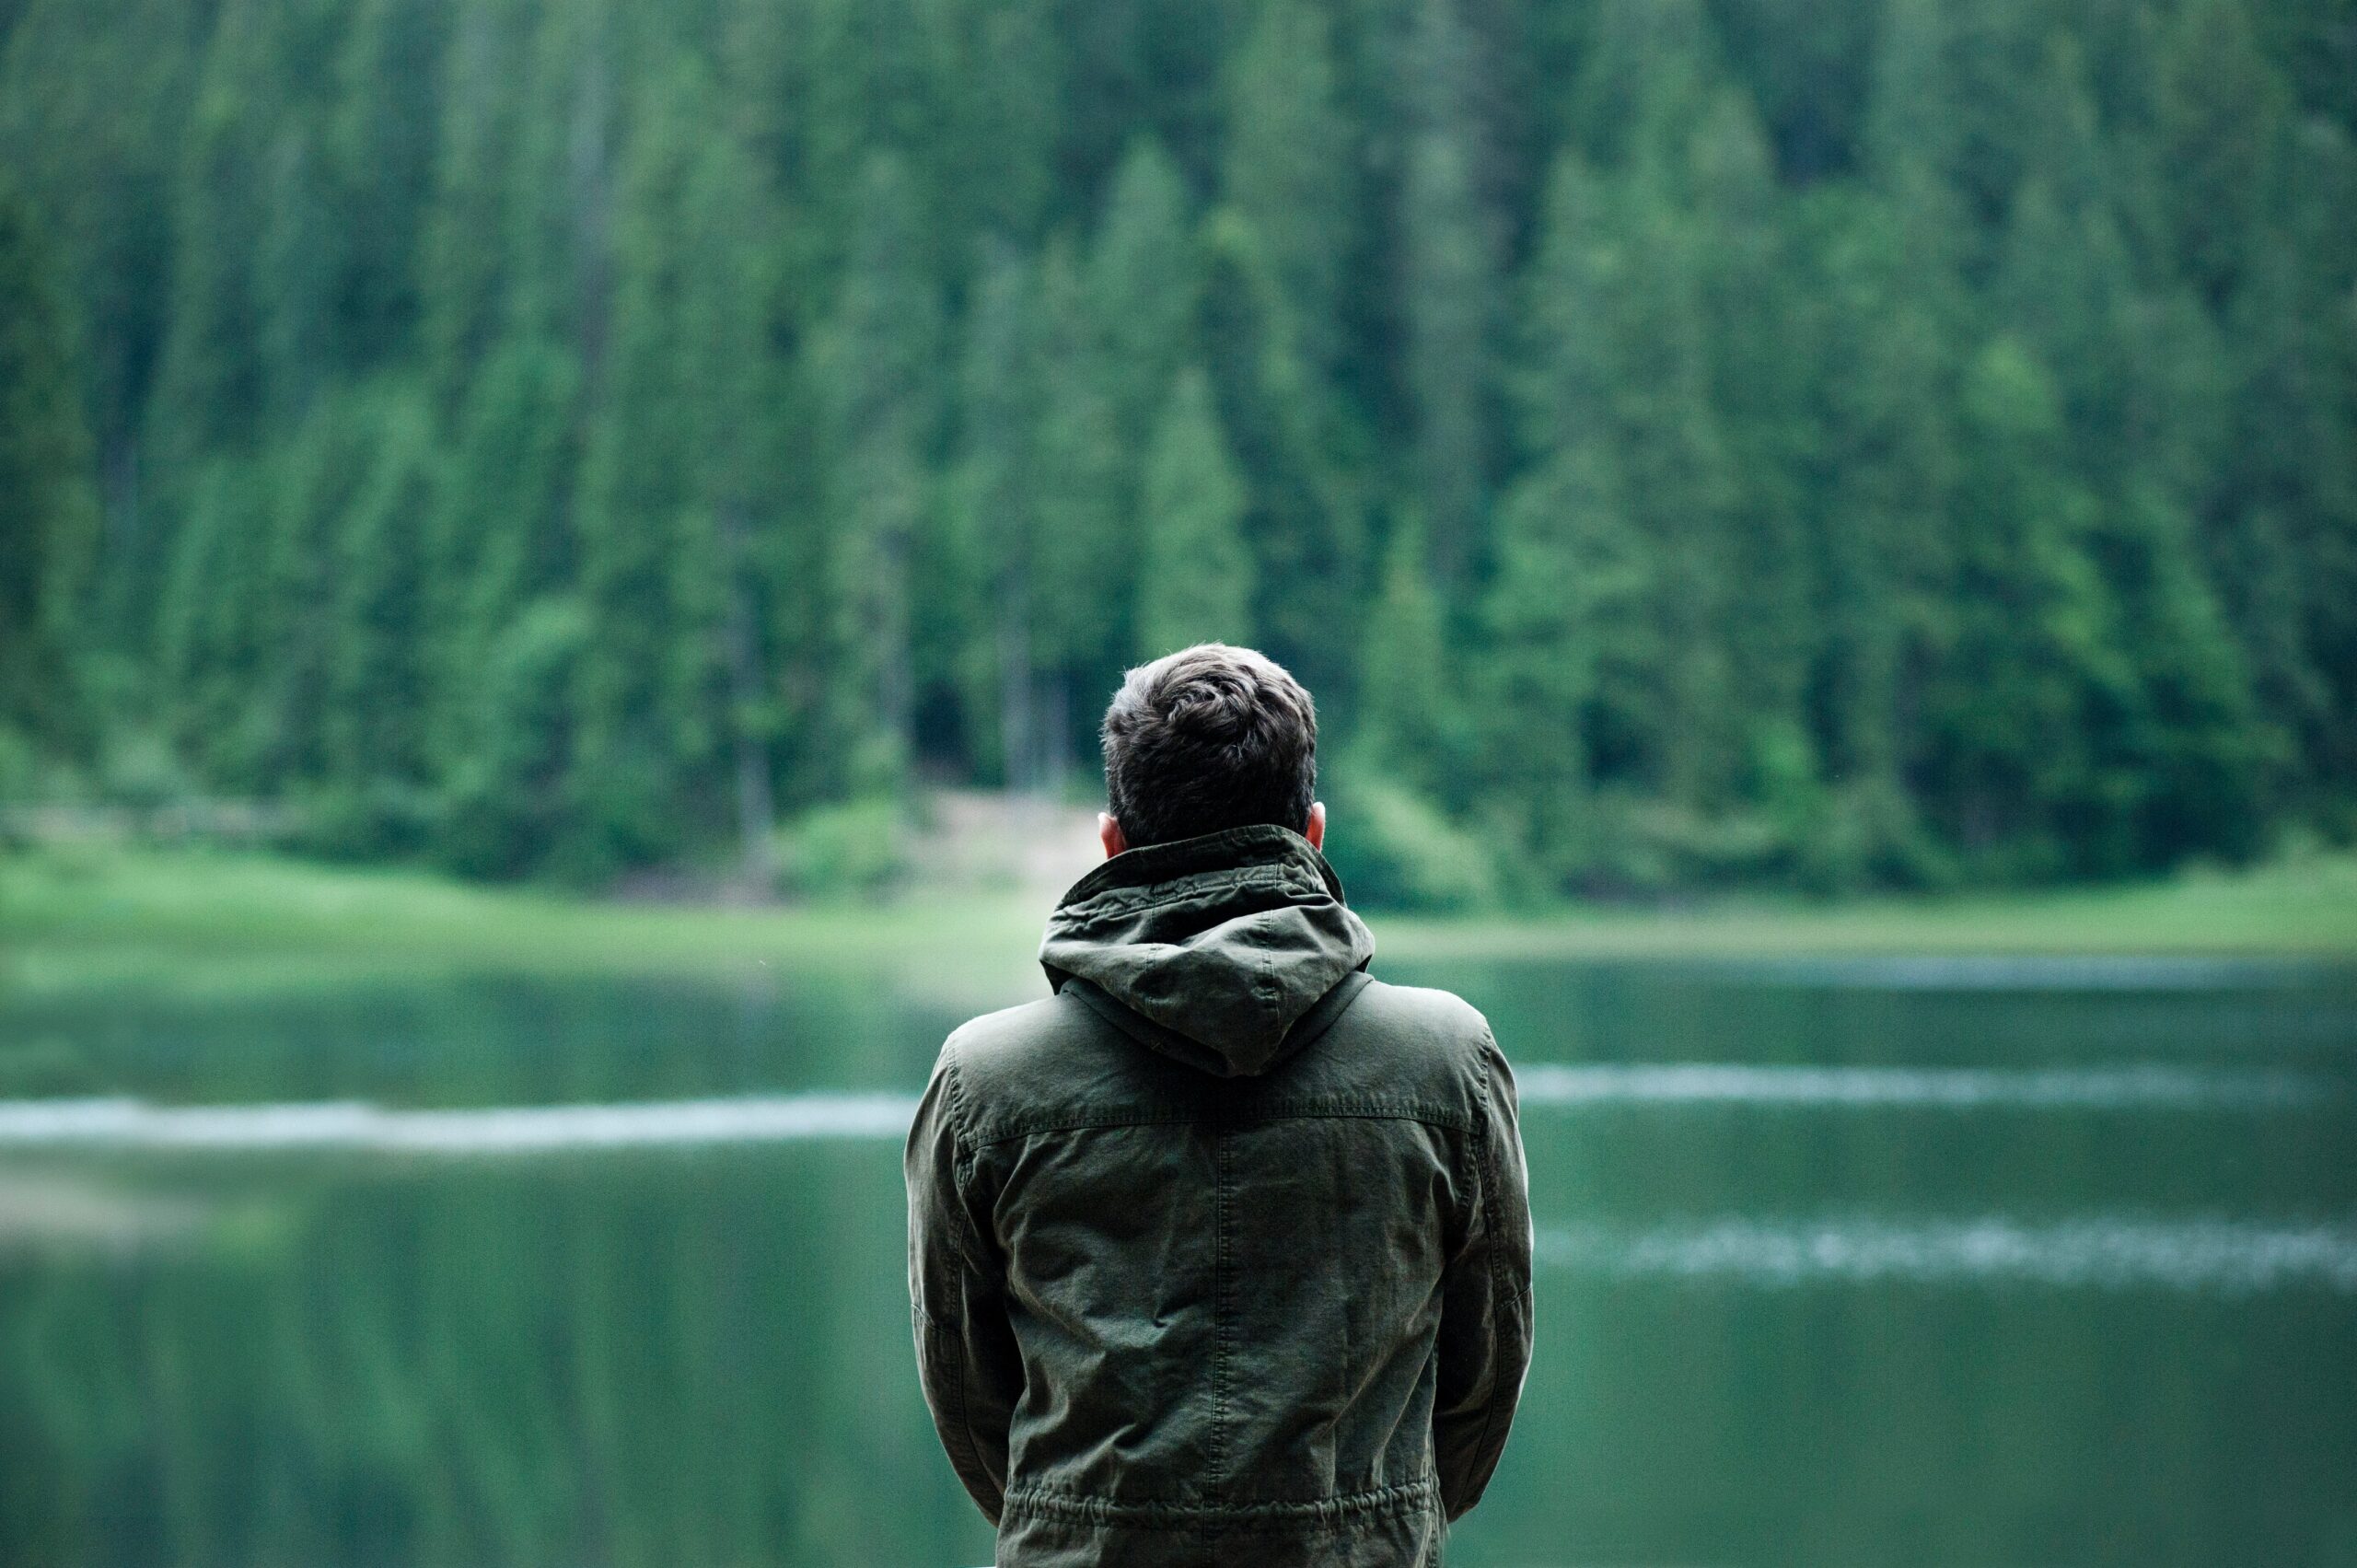 A man standing by a lake